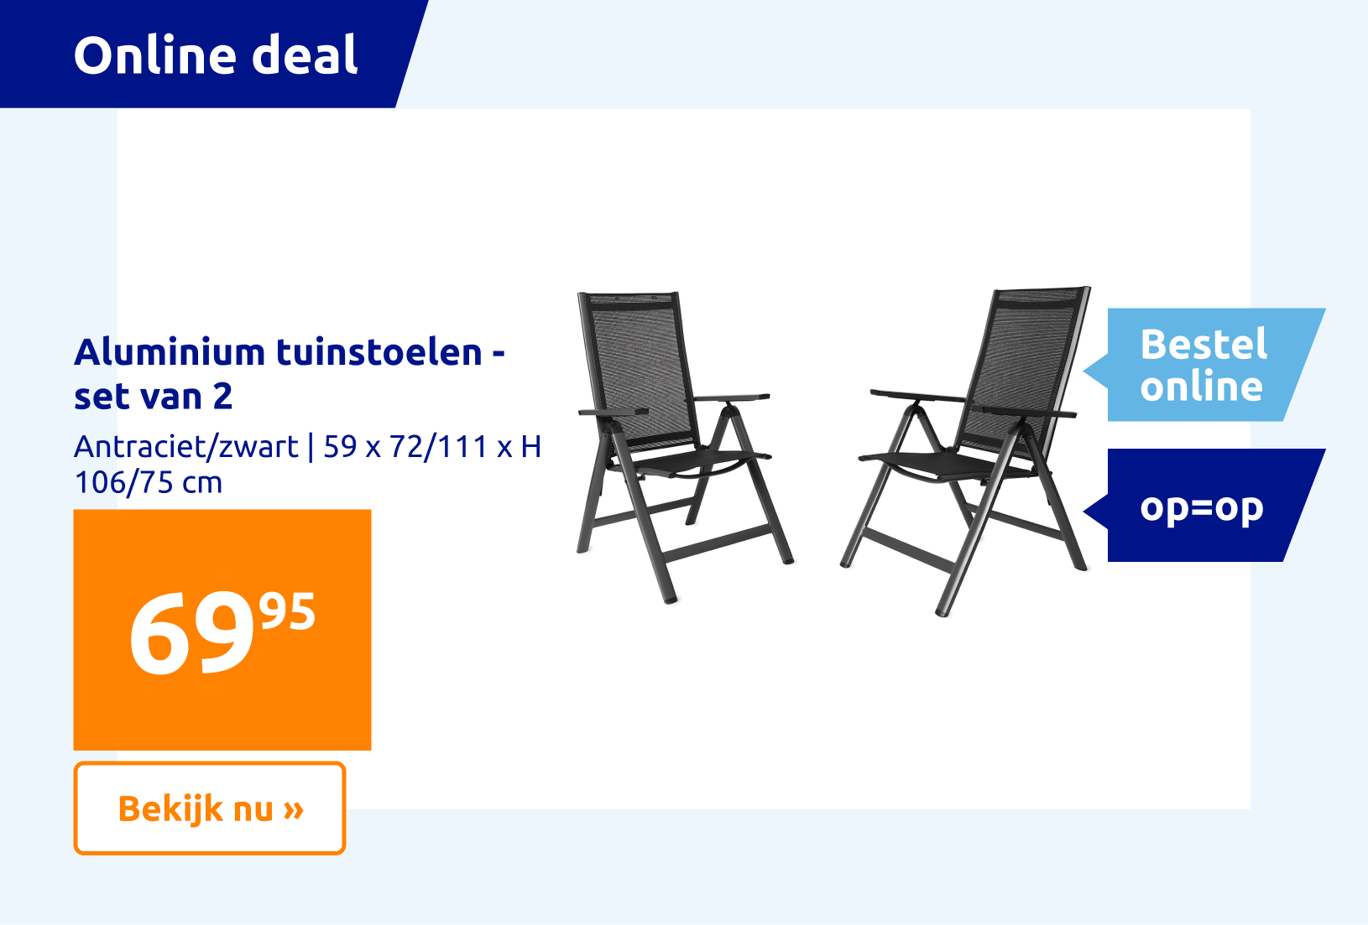 https://shop.action.com/nl-nl/p/8718964175338/aluminium-tuinstoelen-set-van-2?utm_source=web&utm_medium=ecomlink&utm_campaign=category_page